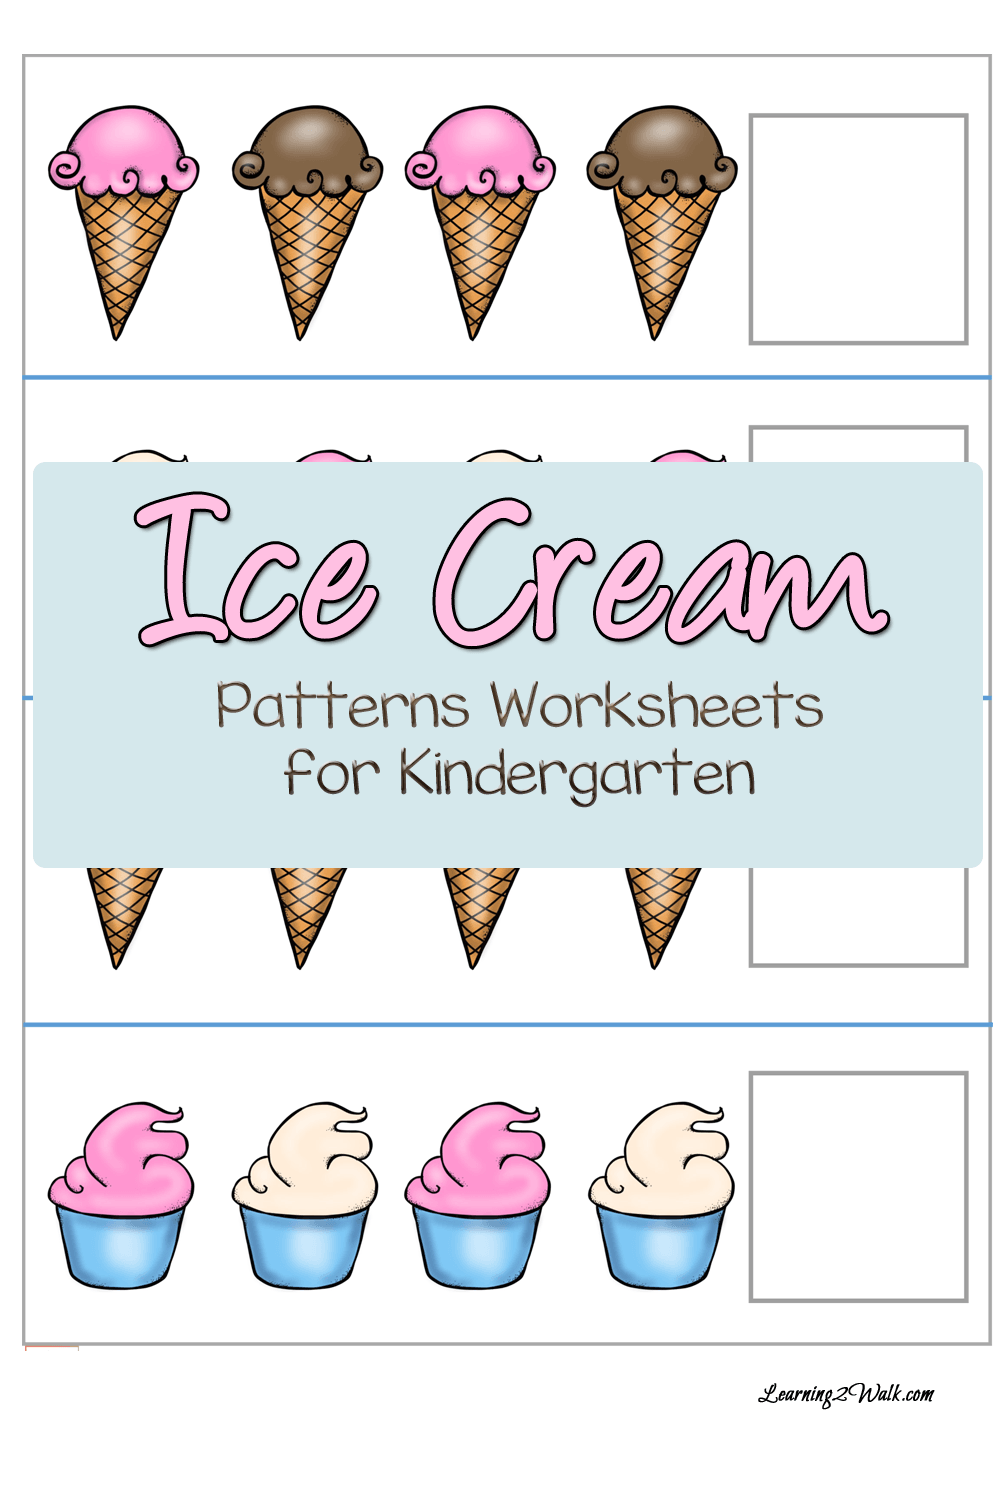 Ice Cream Patterns Worksheets For Kindergarten Pattern Worksheets For Kindergarten Pattern Worksheet Kindergarten Worksheets